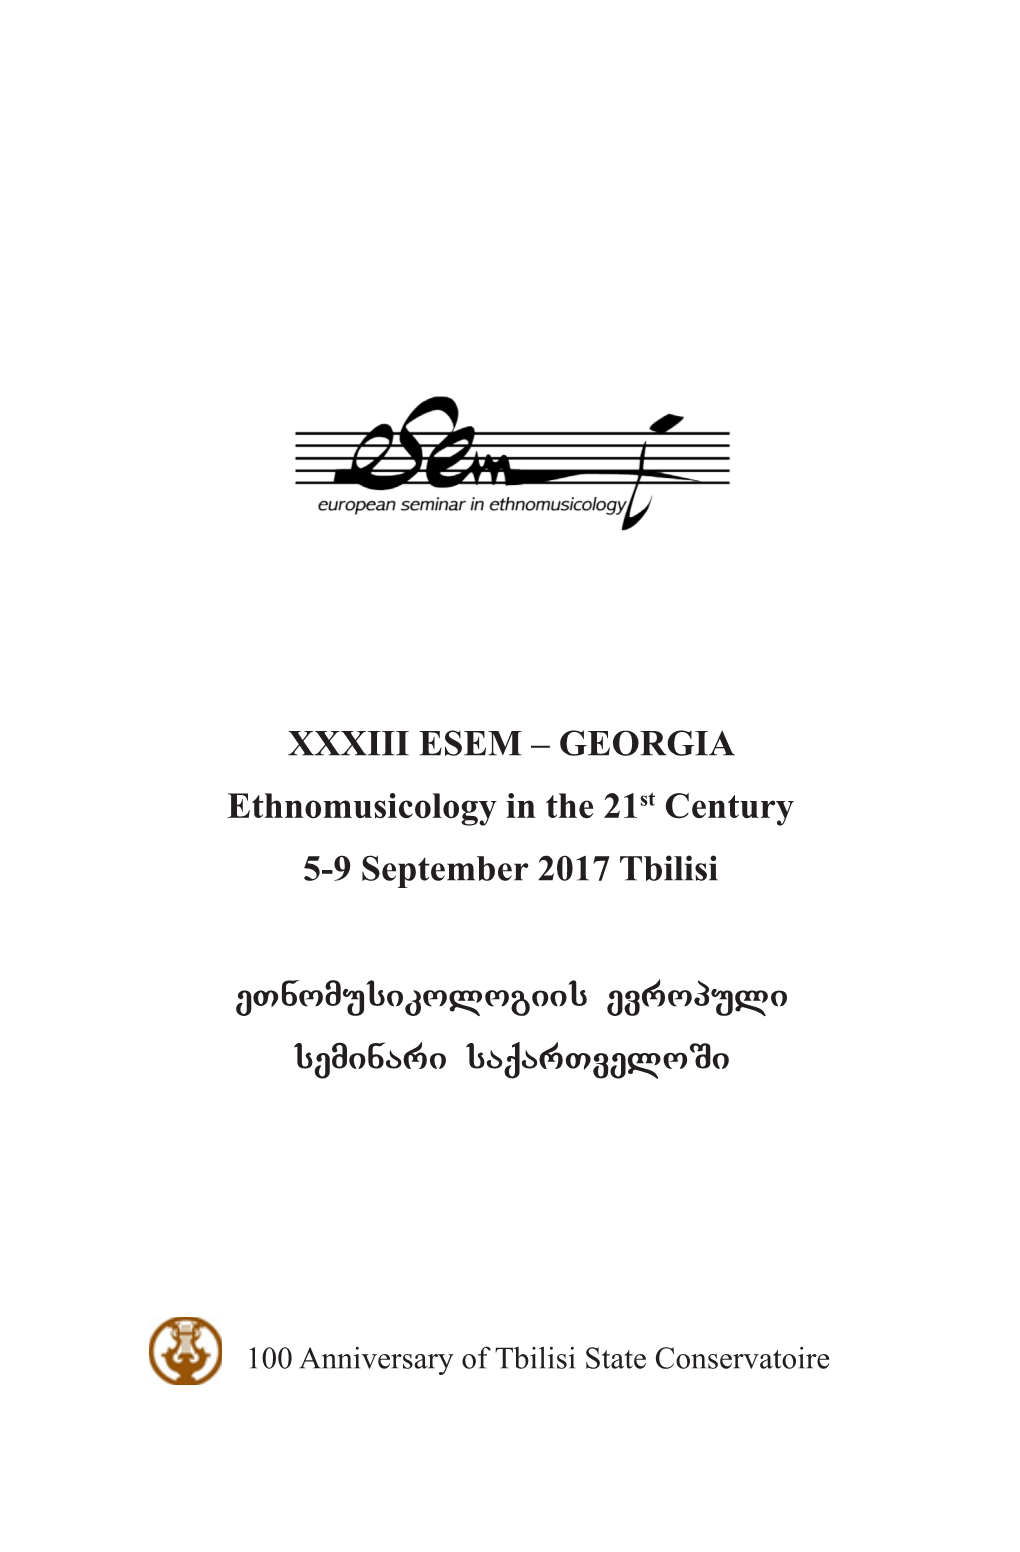 GEORGIA Ethnomusicology in the 21St Century 5-9 September 2017 Tbilisi Etnomusikologiis Evropuli Seminari Saqartvelosi